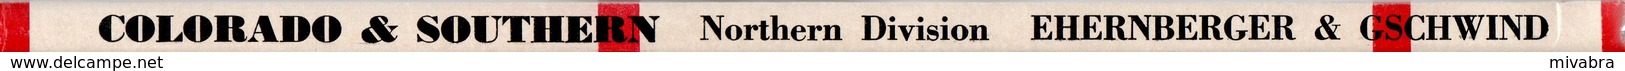 COLORADO & SOUTHERN NORTHERN DIVISION - J. L. EHERNBERGER & G. GSCHWIND - (LOCOMOTIVES EISENBAHNEN CHEMIN DE FER VAPEUR) - Transportation